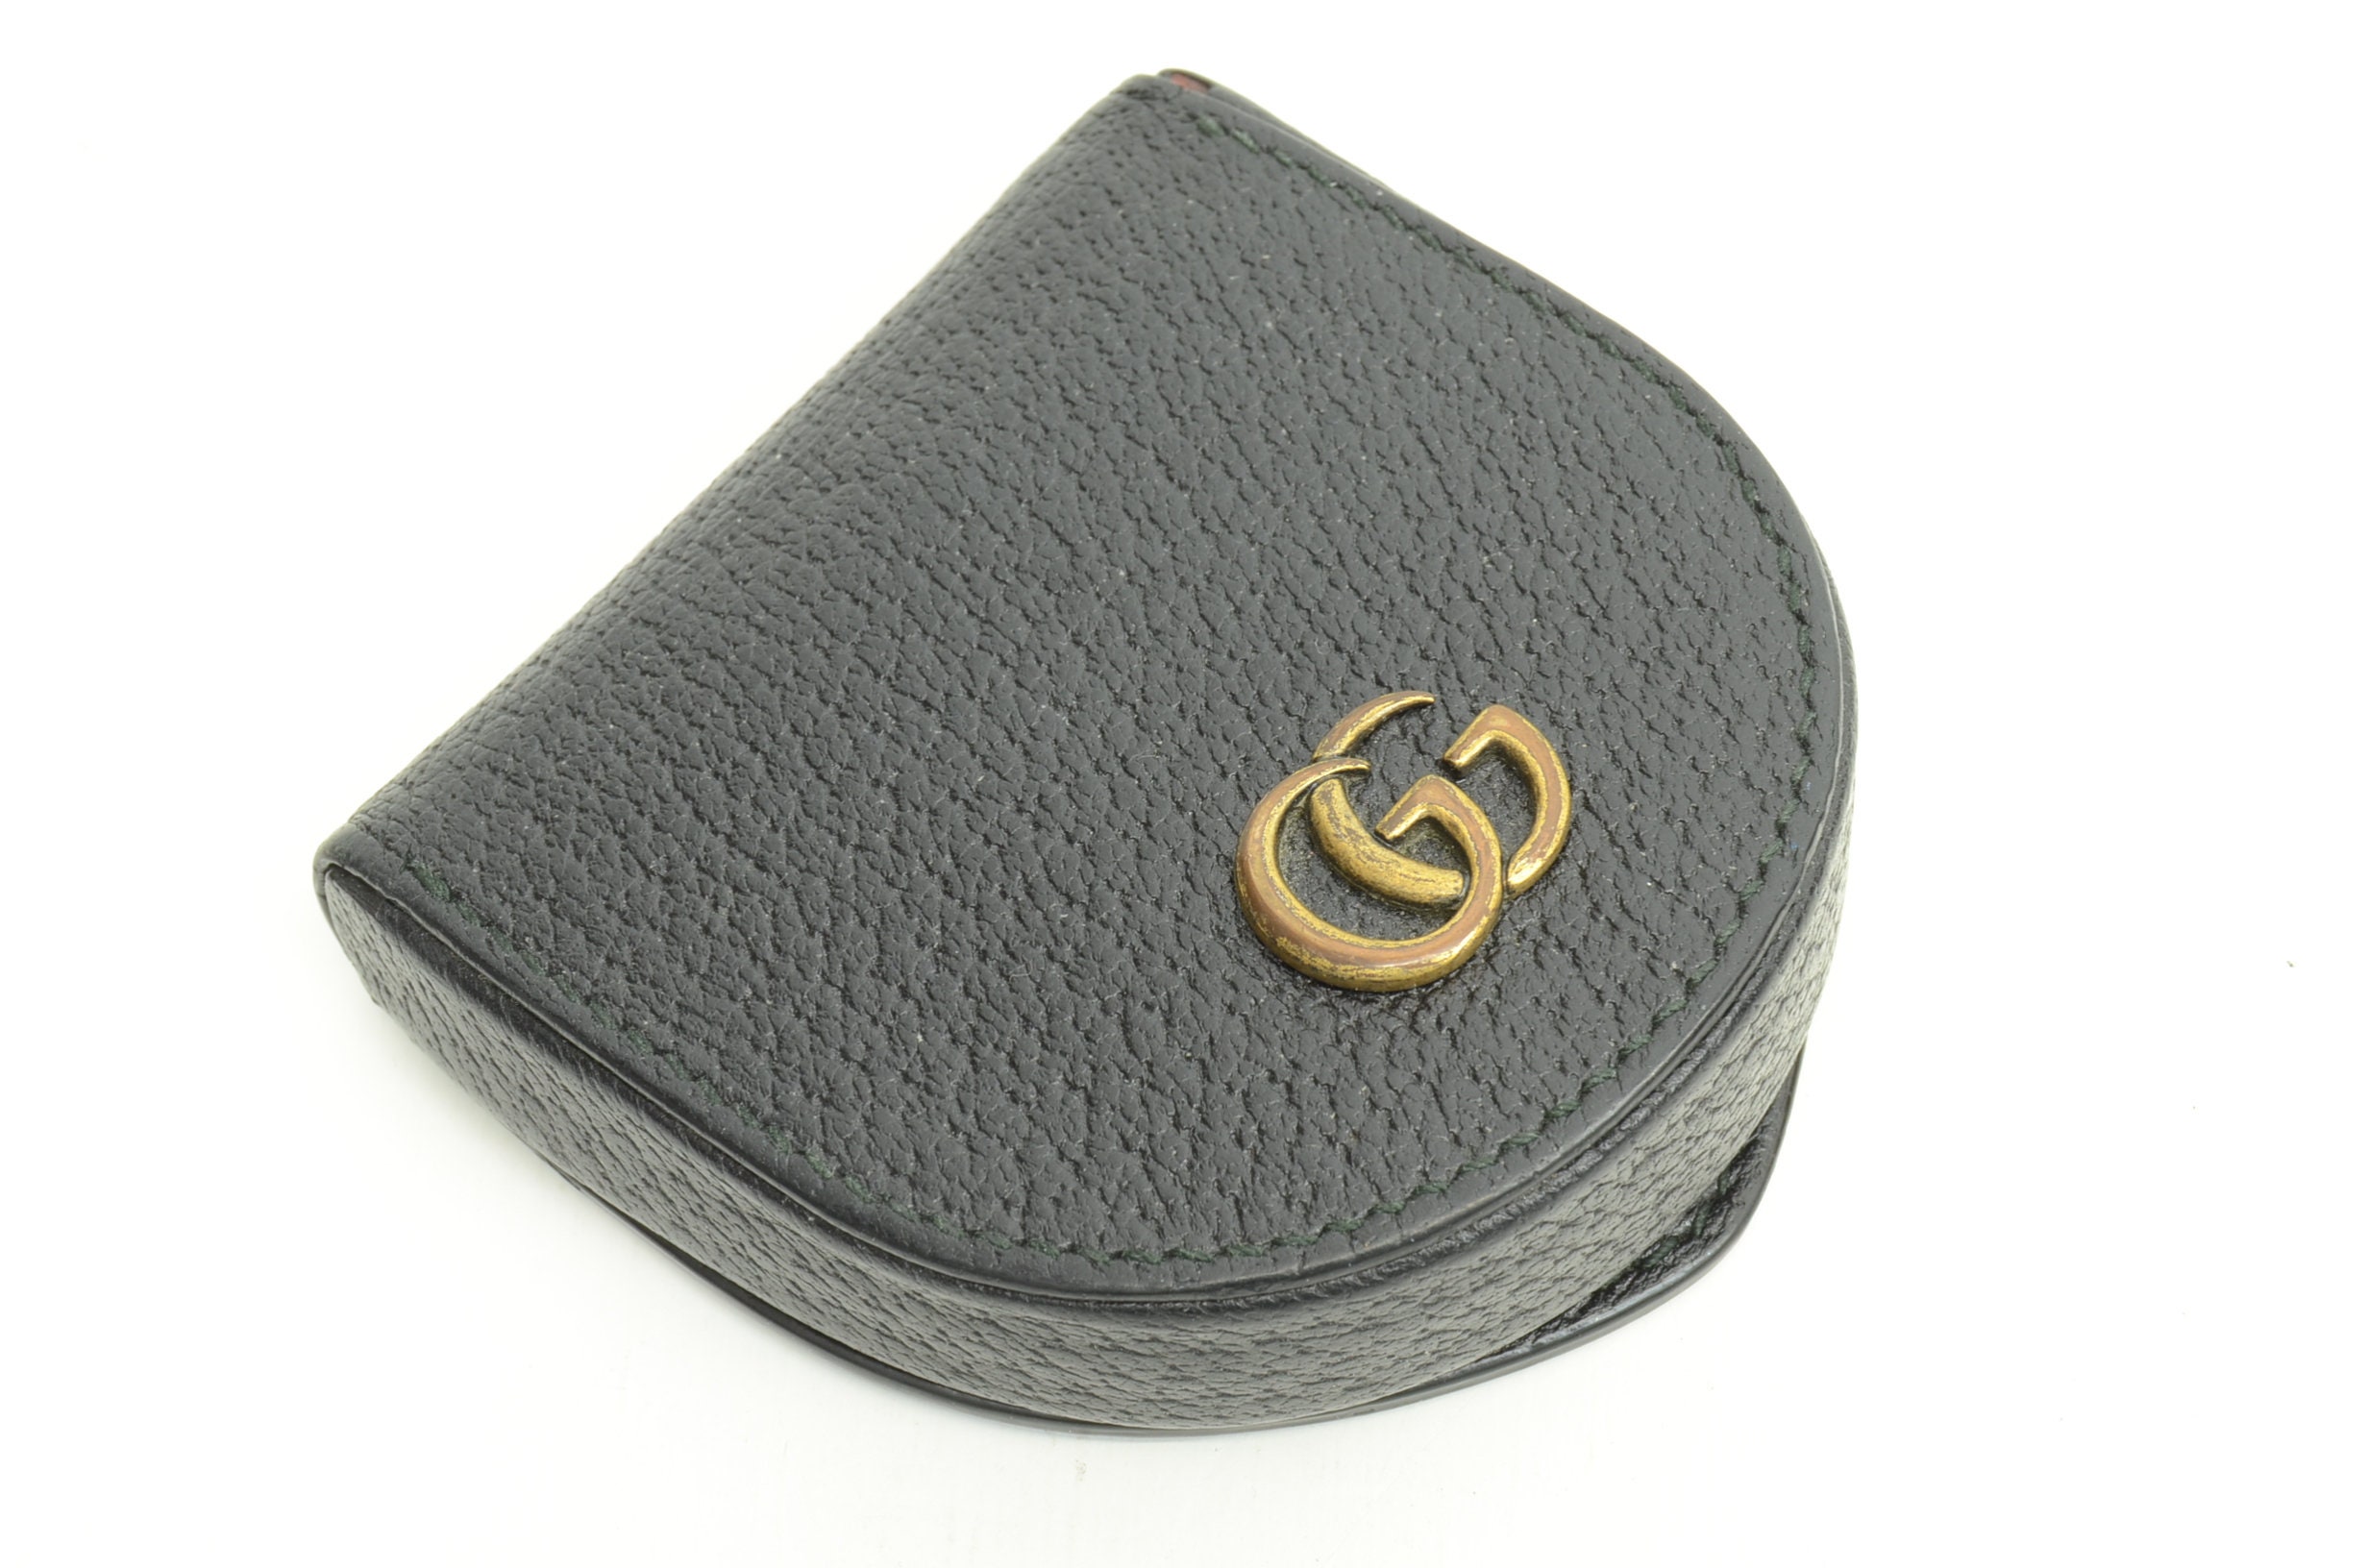 Vintage Gucci bag monogram with glasses case coin purses